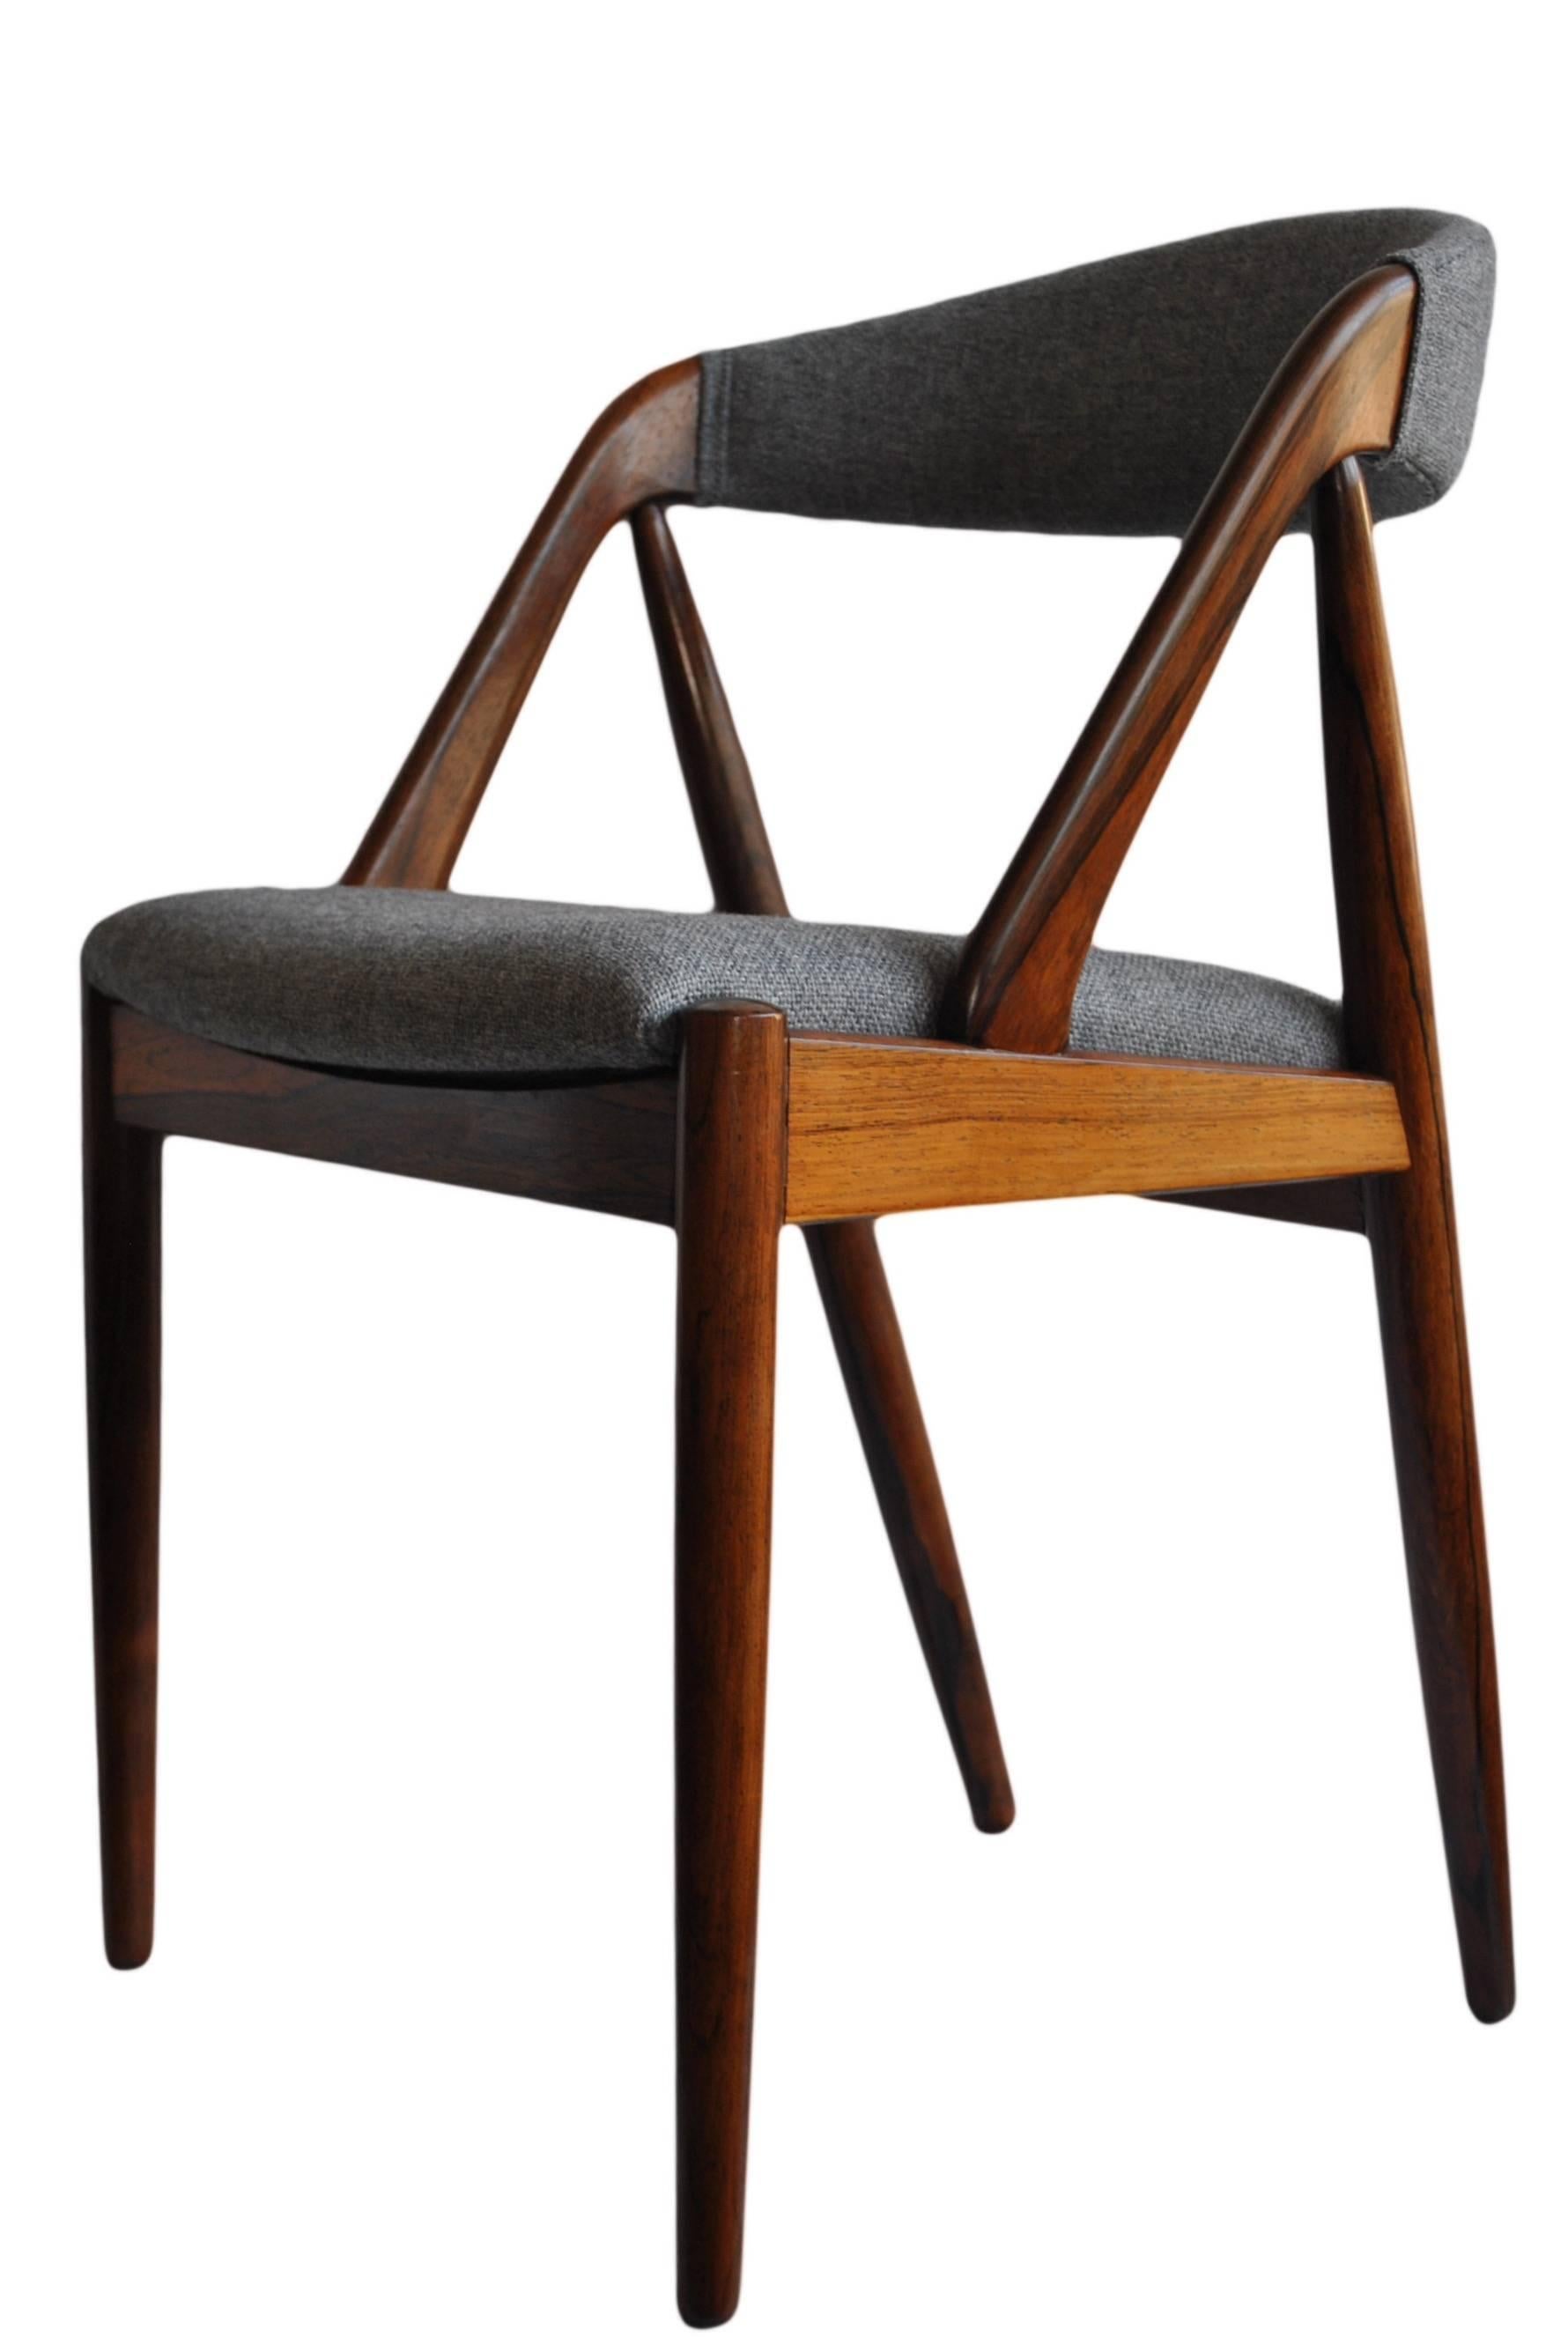 Set of Four Rosewood Kai Kristiansen Dining Chairs 1